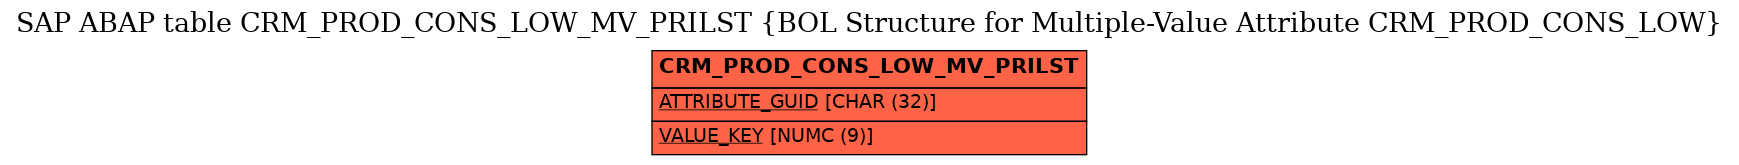 E-R Diagram for table CRM_PROD_CONS_LOW_MV_PRILST (BOL Structure for Multiple-Value Attribute CRM_PROD_CONS_LOW)